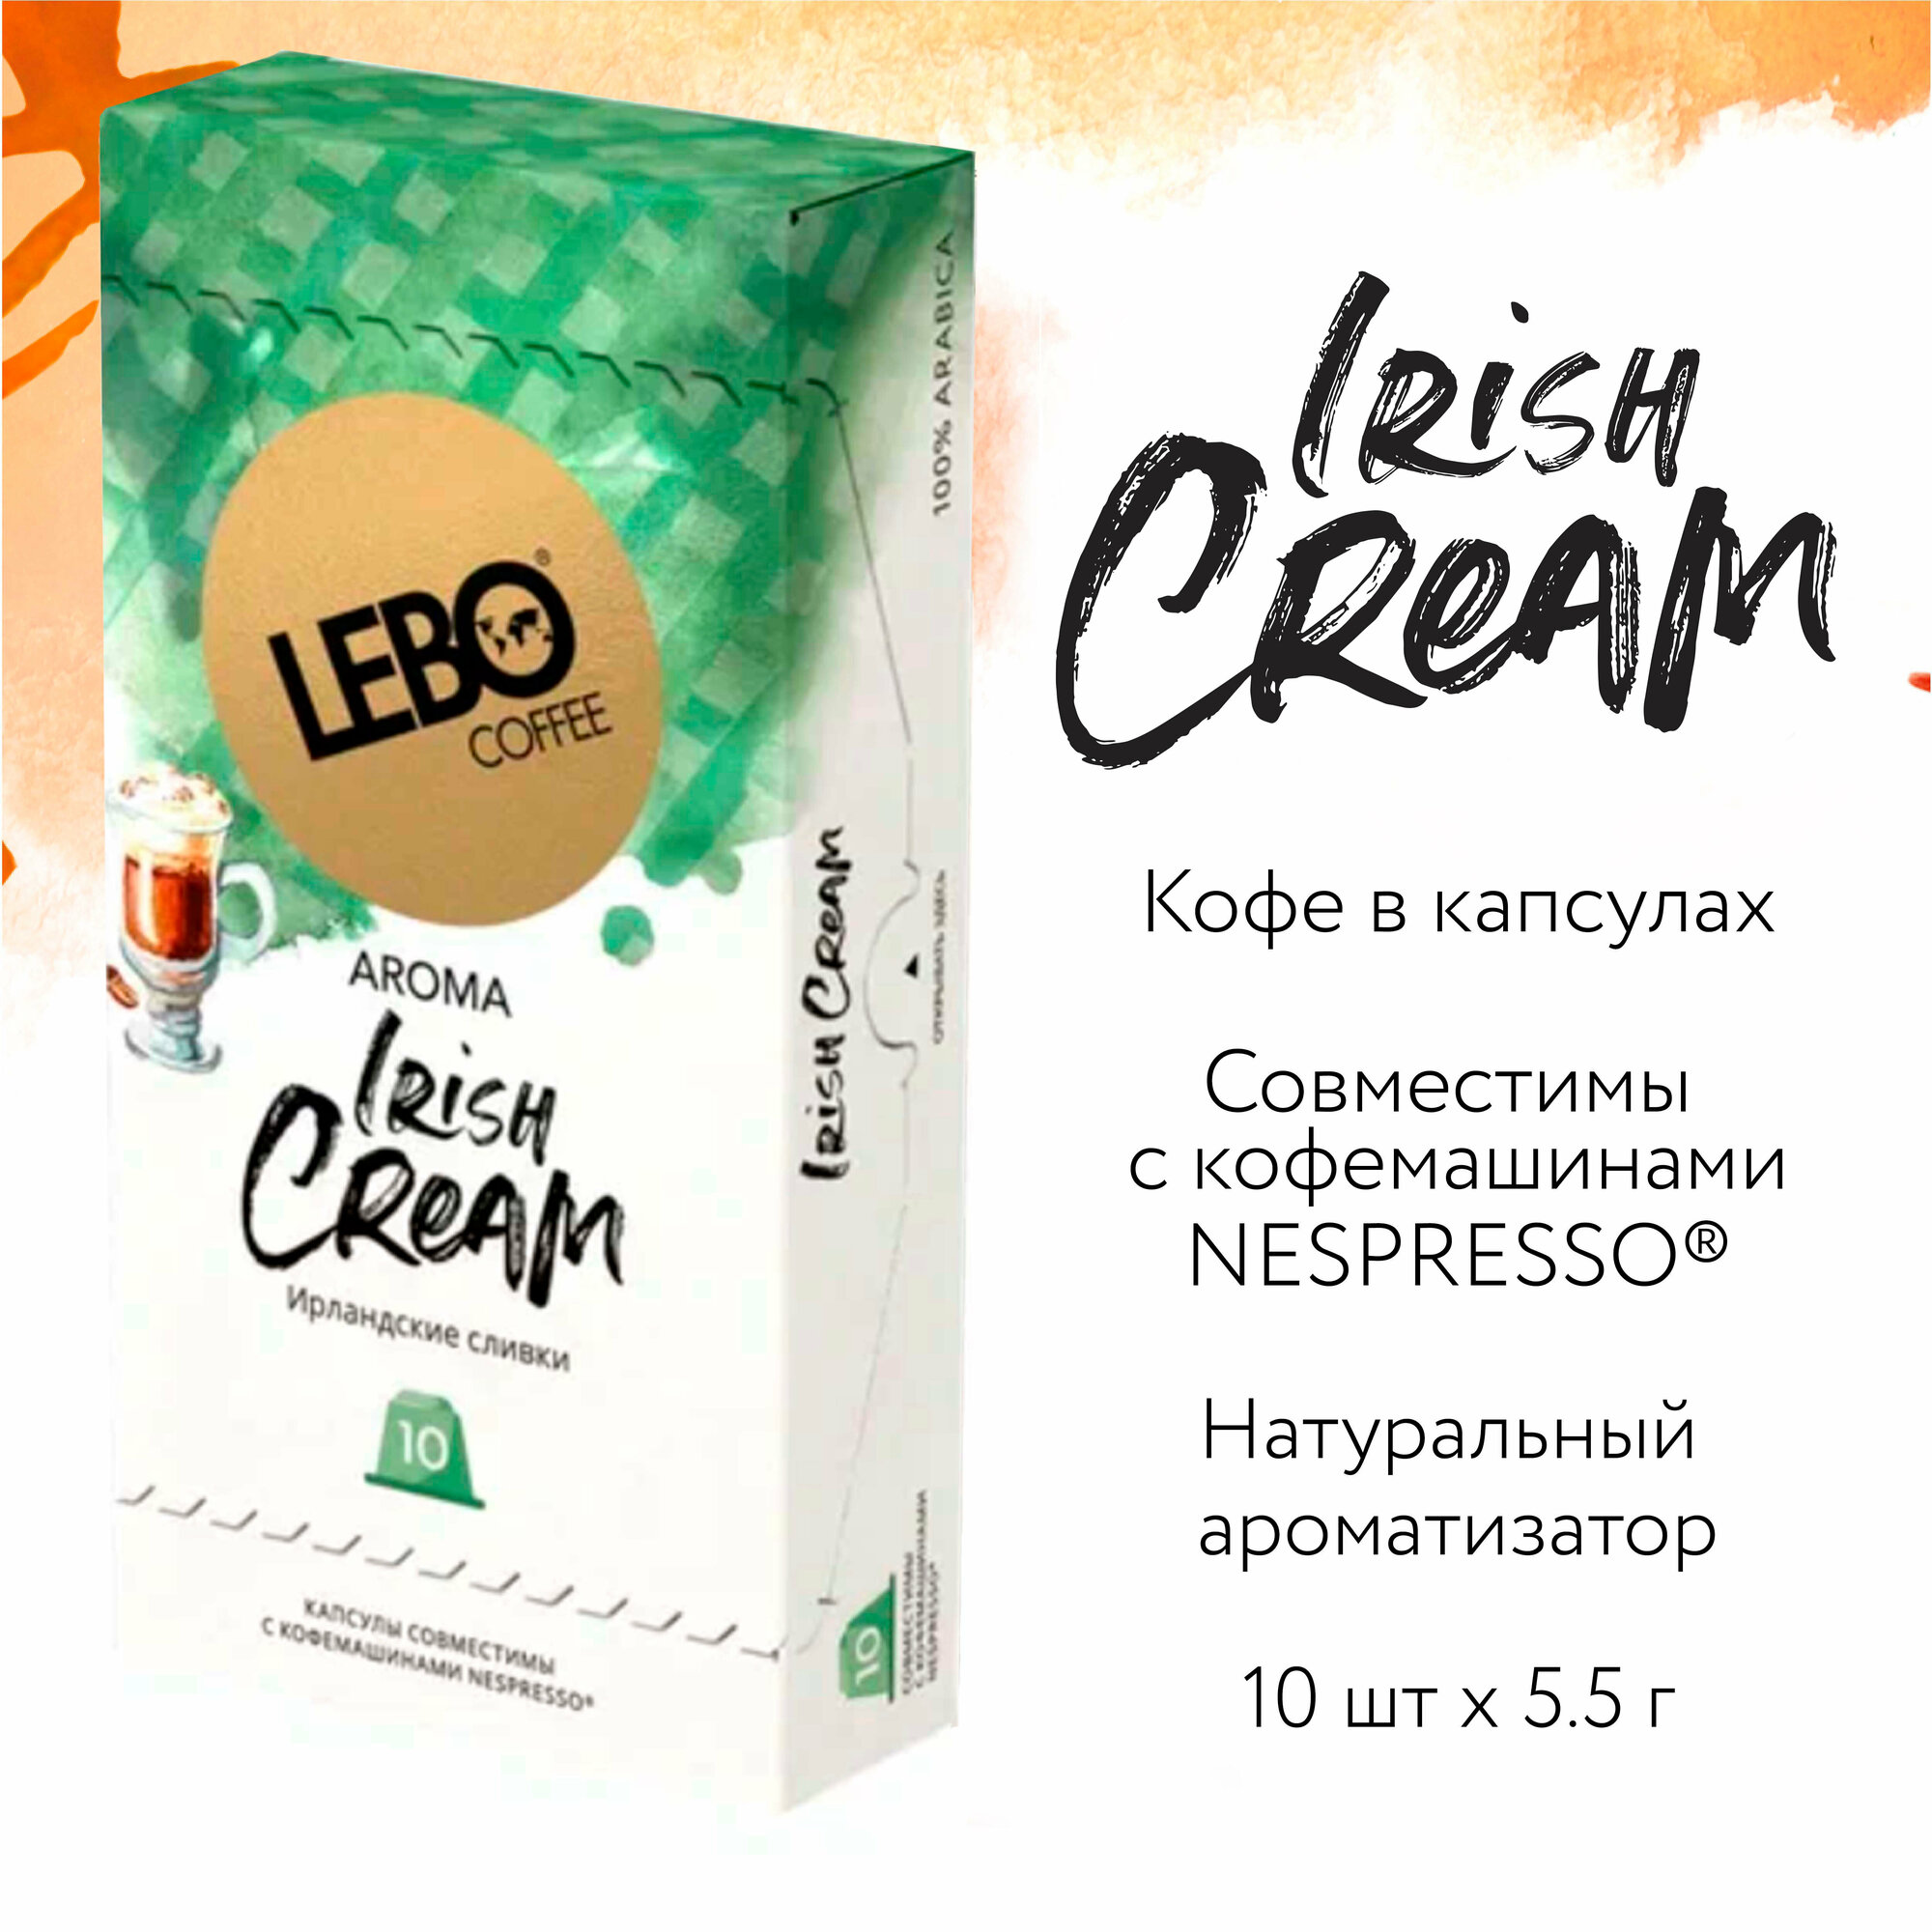 Lebo Irish Cream кофе в капсулах с ароматом Ирландские сливки (10капс.)